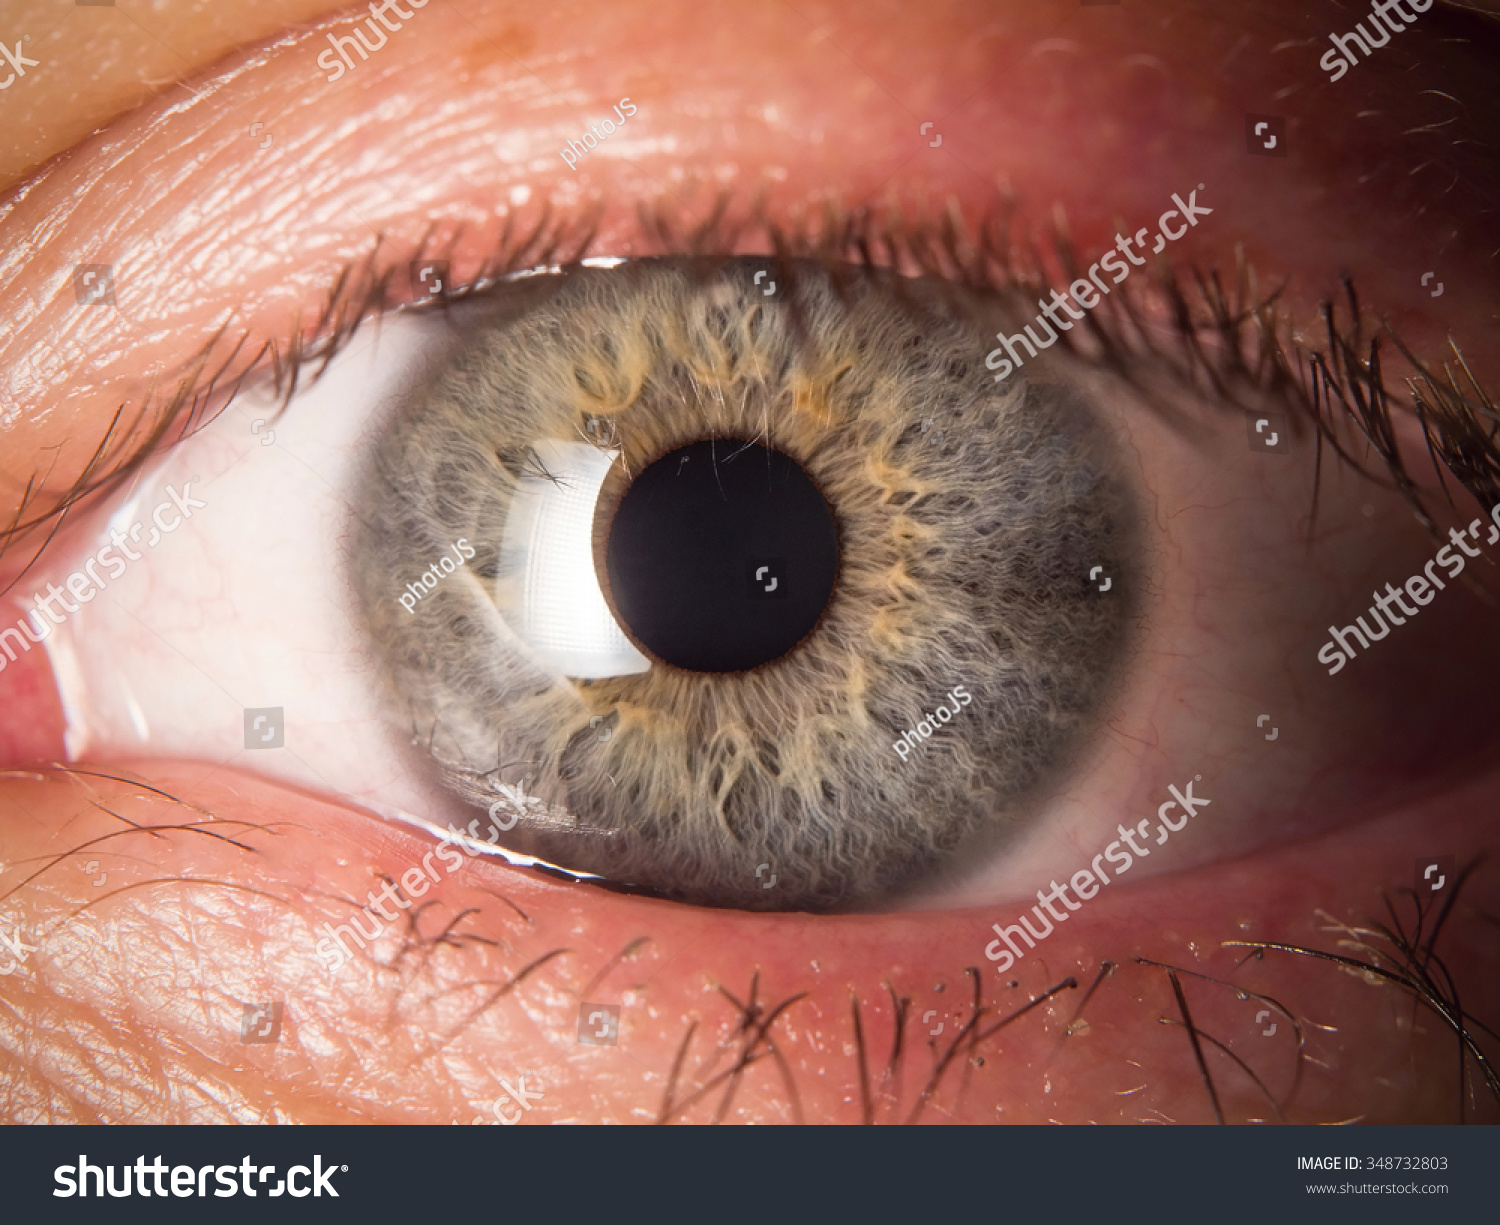 Human Eye Detail Stock Photo 348732803 : Shutterstock